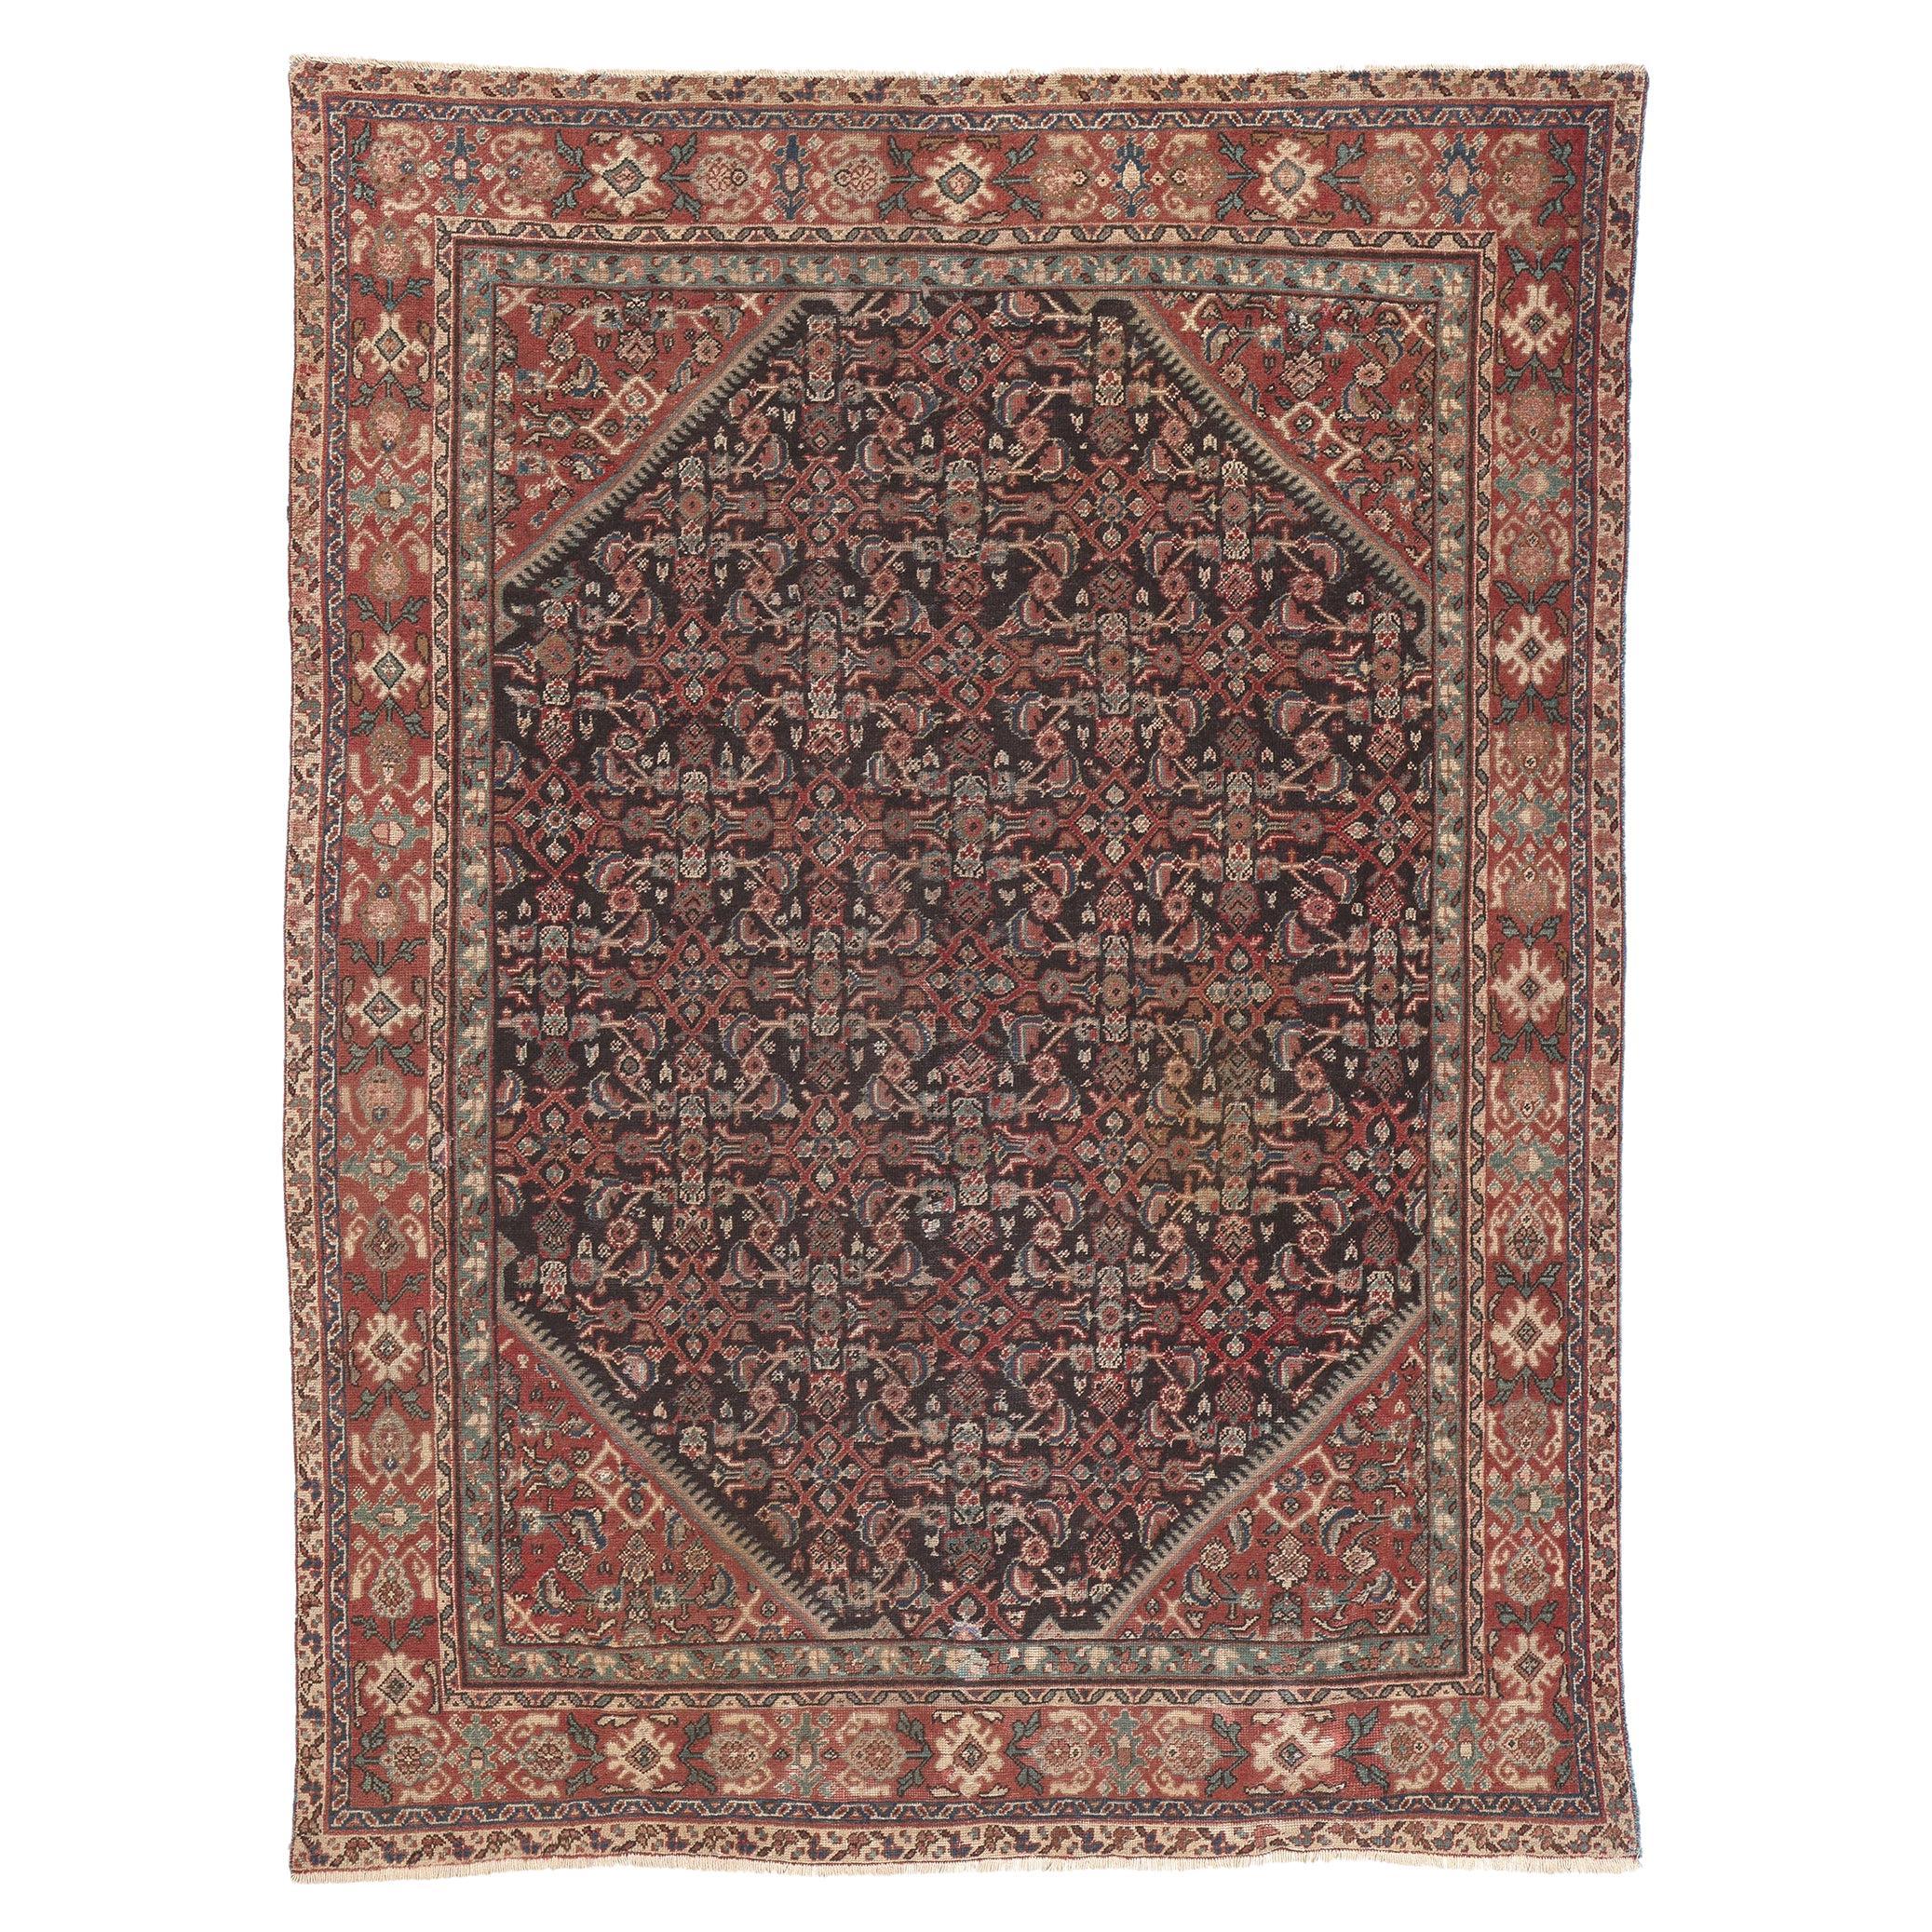 Antique-Worn Persian Mahal Rug, Traditional Sensibility Meets Rustic Charm